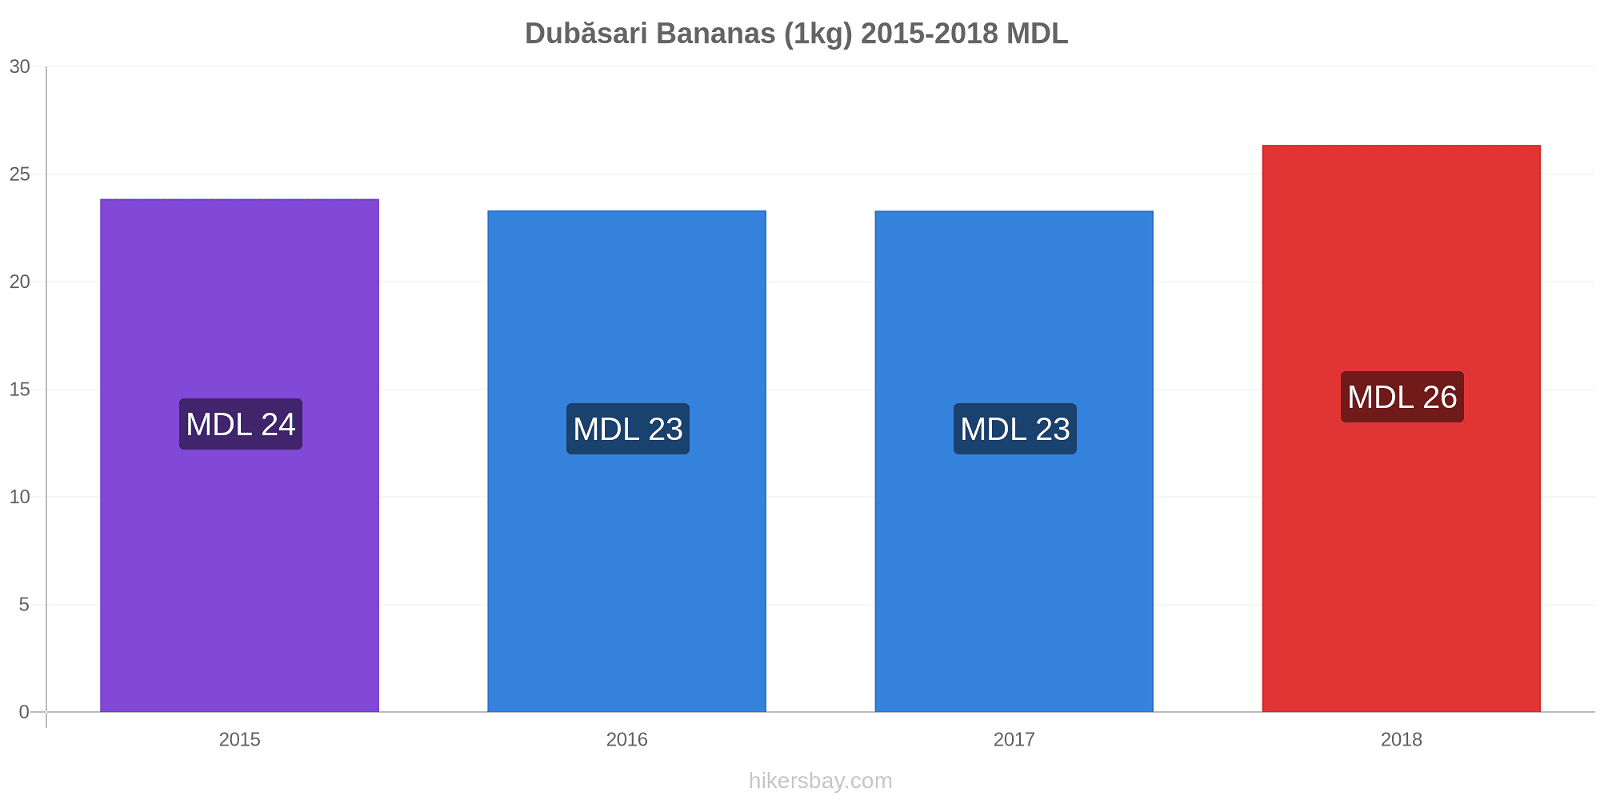 Dubăsari price changes Bananas (1kg) hikersbay.com